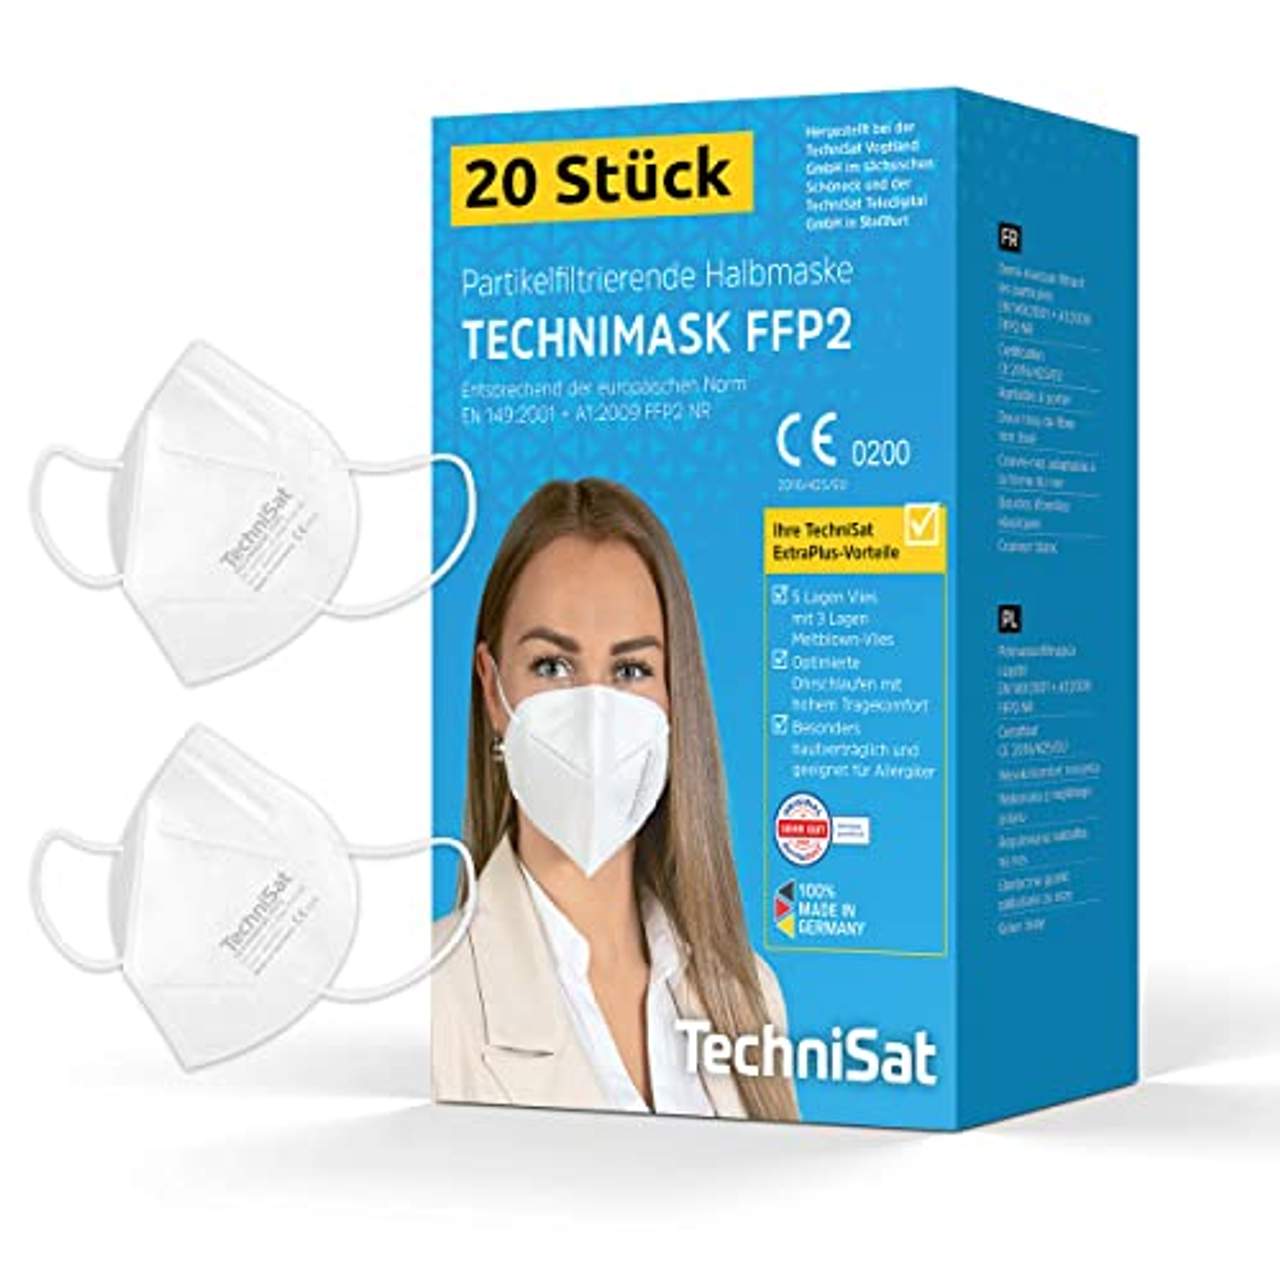 TechniSat Technimask FFP2 Maske 20 Stück Made in Germany